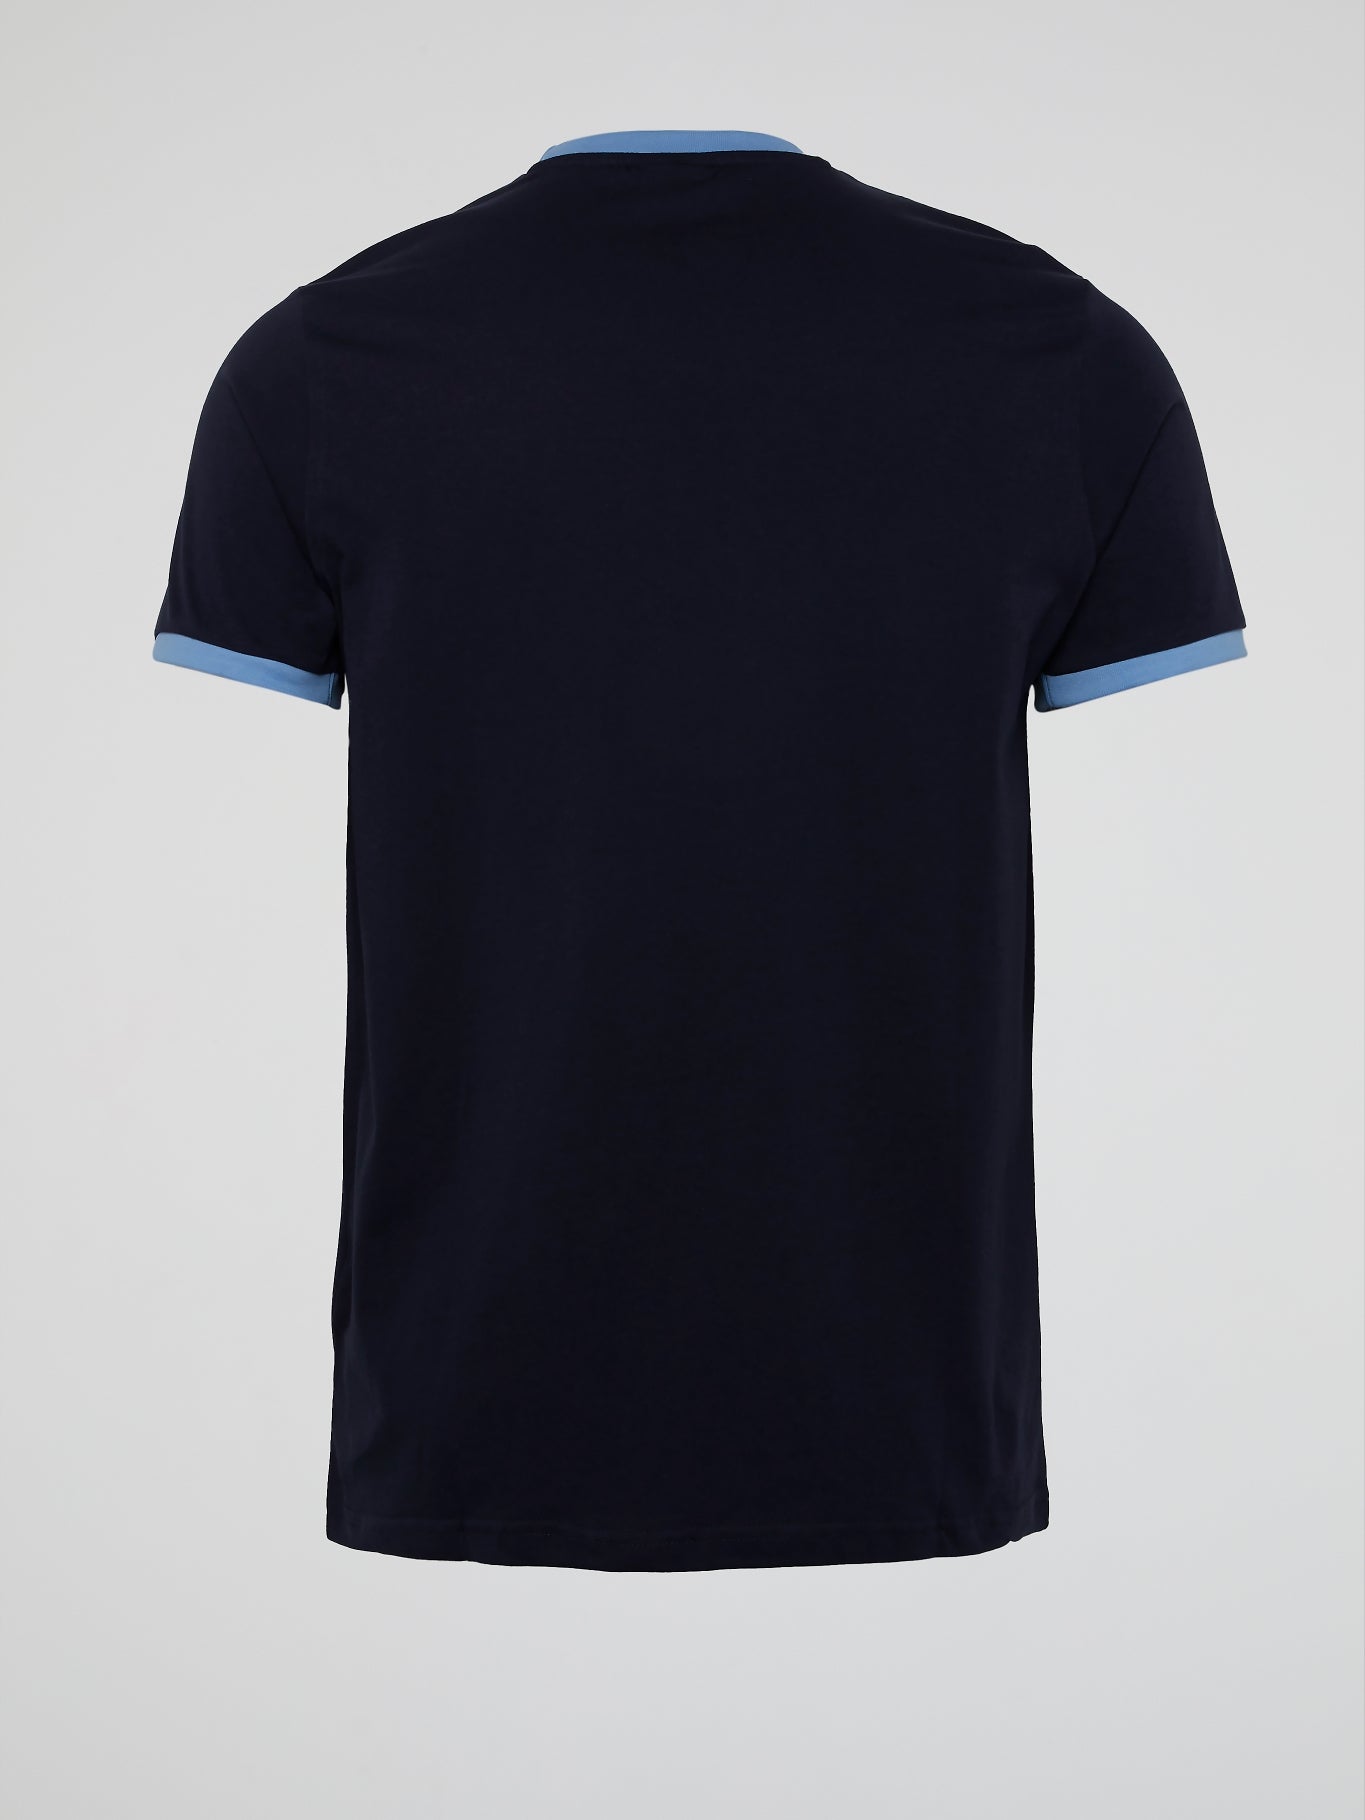 Limora Navy Contrast Trim T-Shirt